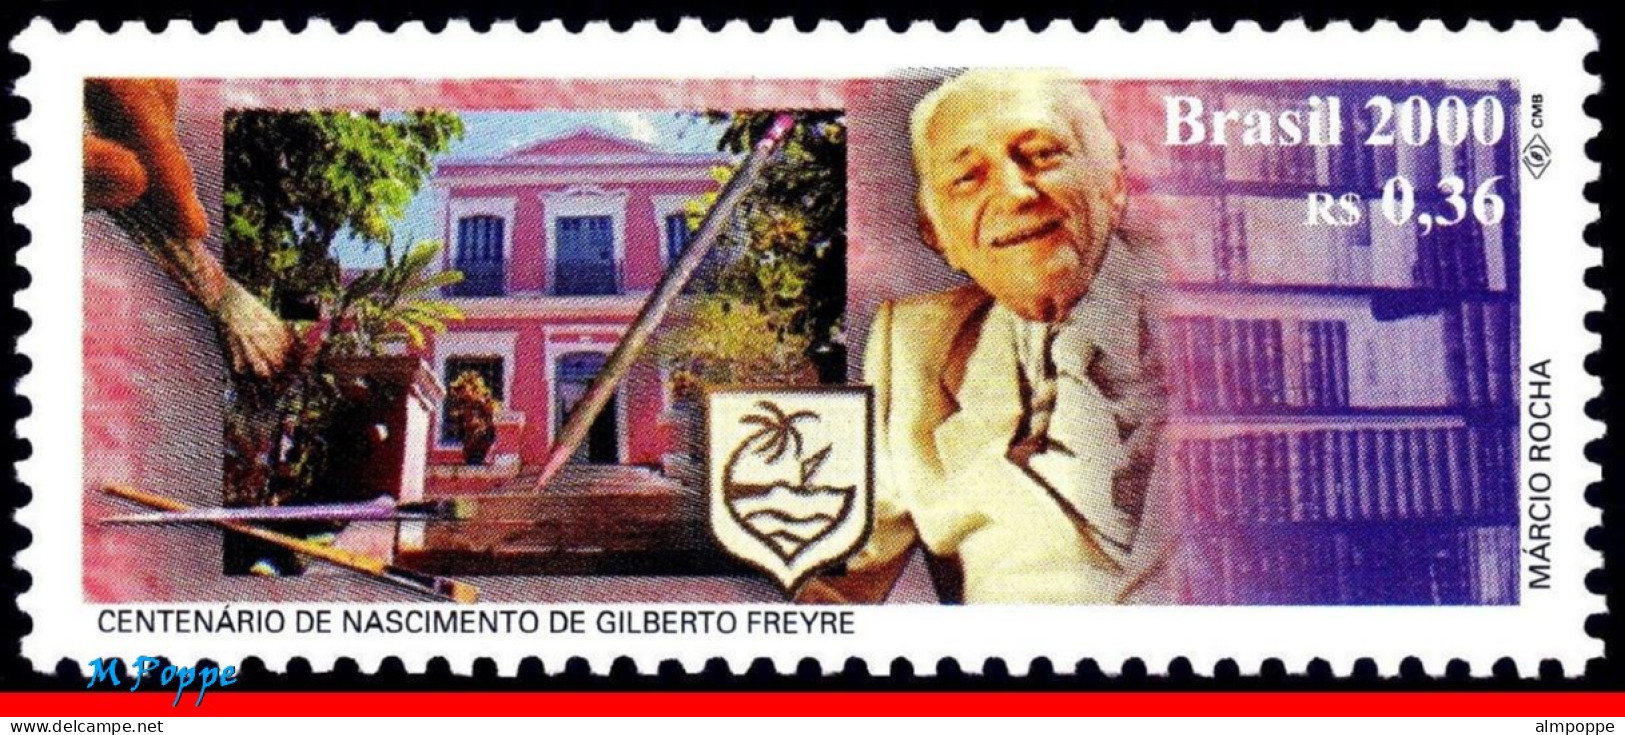 Ref. BR-2736 BRAZIL 2000 - GILBERTO FREYRE,SOCIOLOGIST, MI# 3000, MNH, FAMOUS PEOPLE 1V Sc# 2736 - Unused Stamps